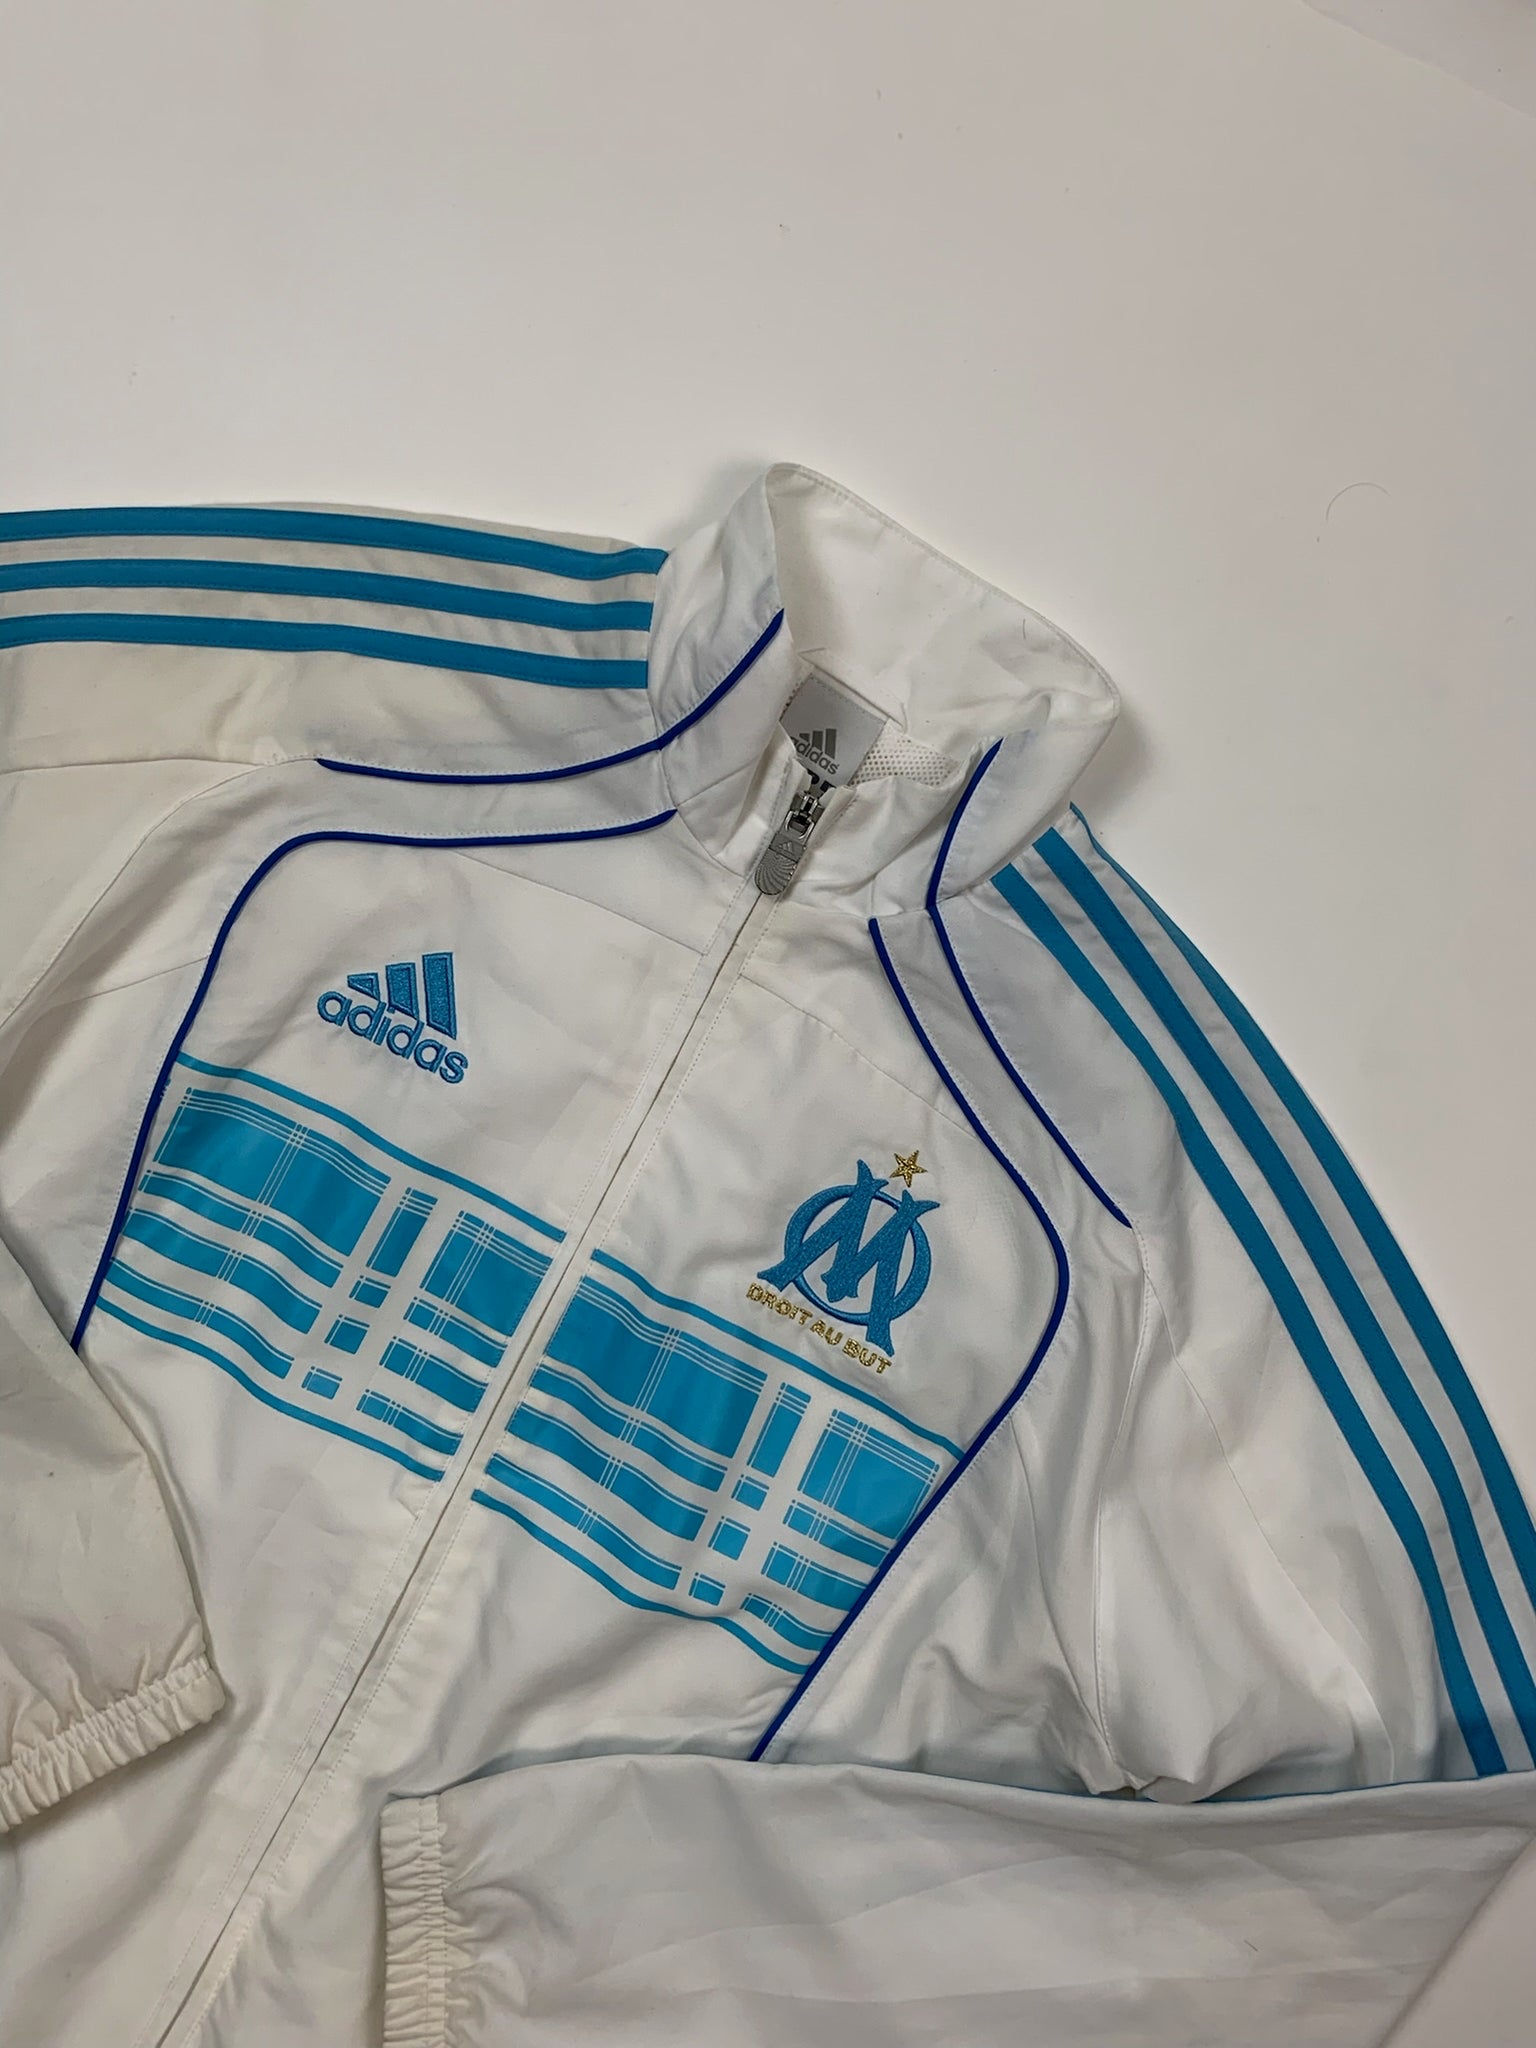 Adidas Olympique De Marseille Tracksuit (Kids XL)